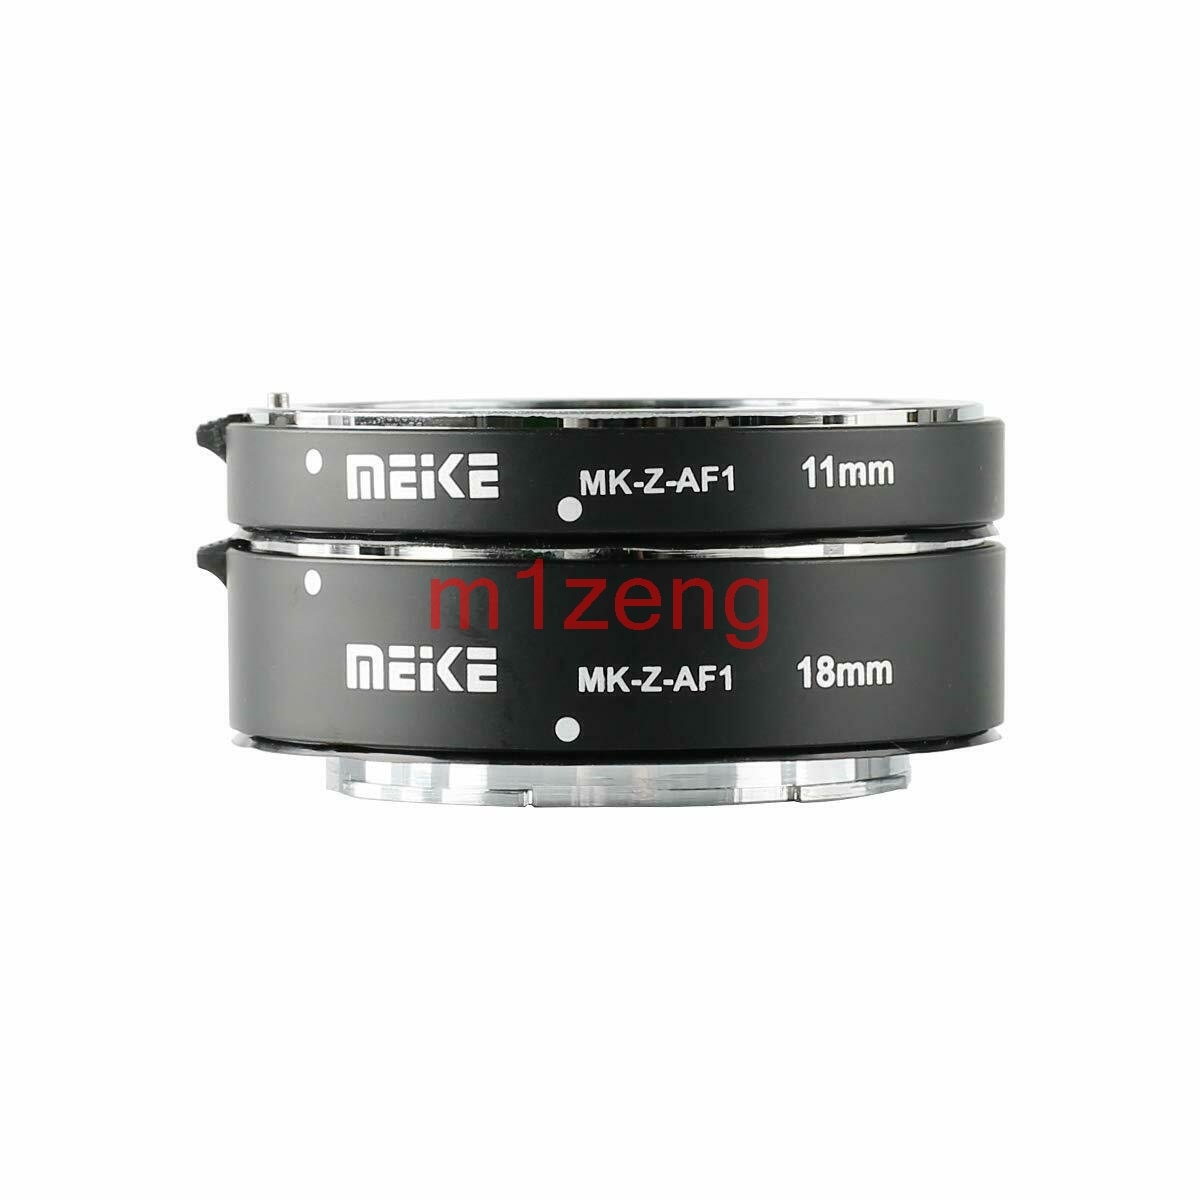 Auto Focus Af Macro Extension Tube Ring11mm + 18Mm Voor Nikon Z Mount Z6 Z7 Z50 Mirrorless Camera